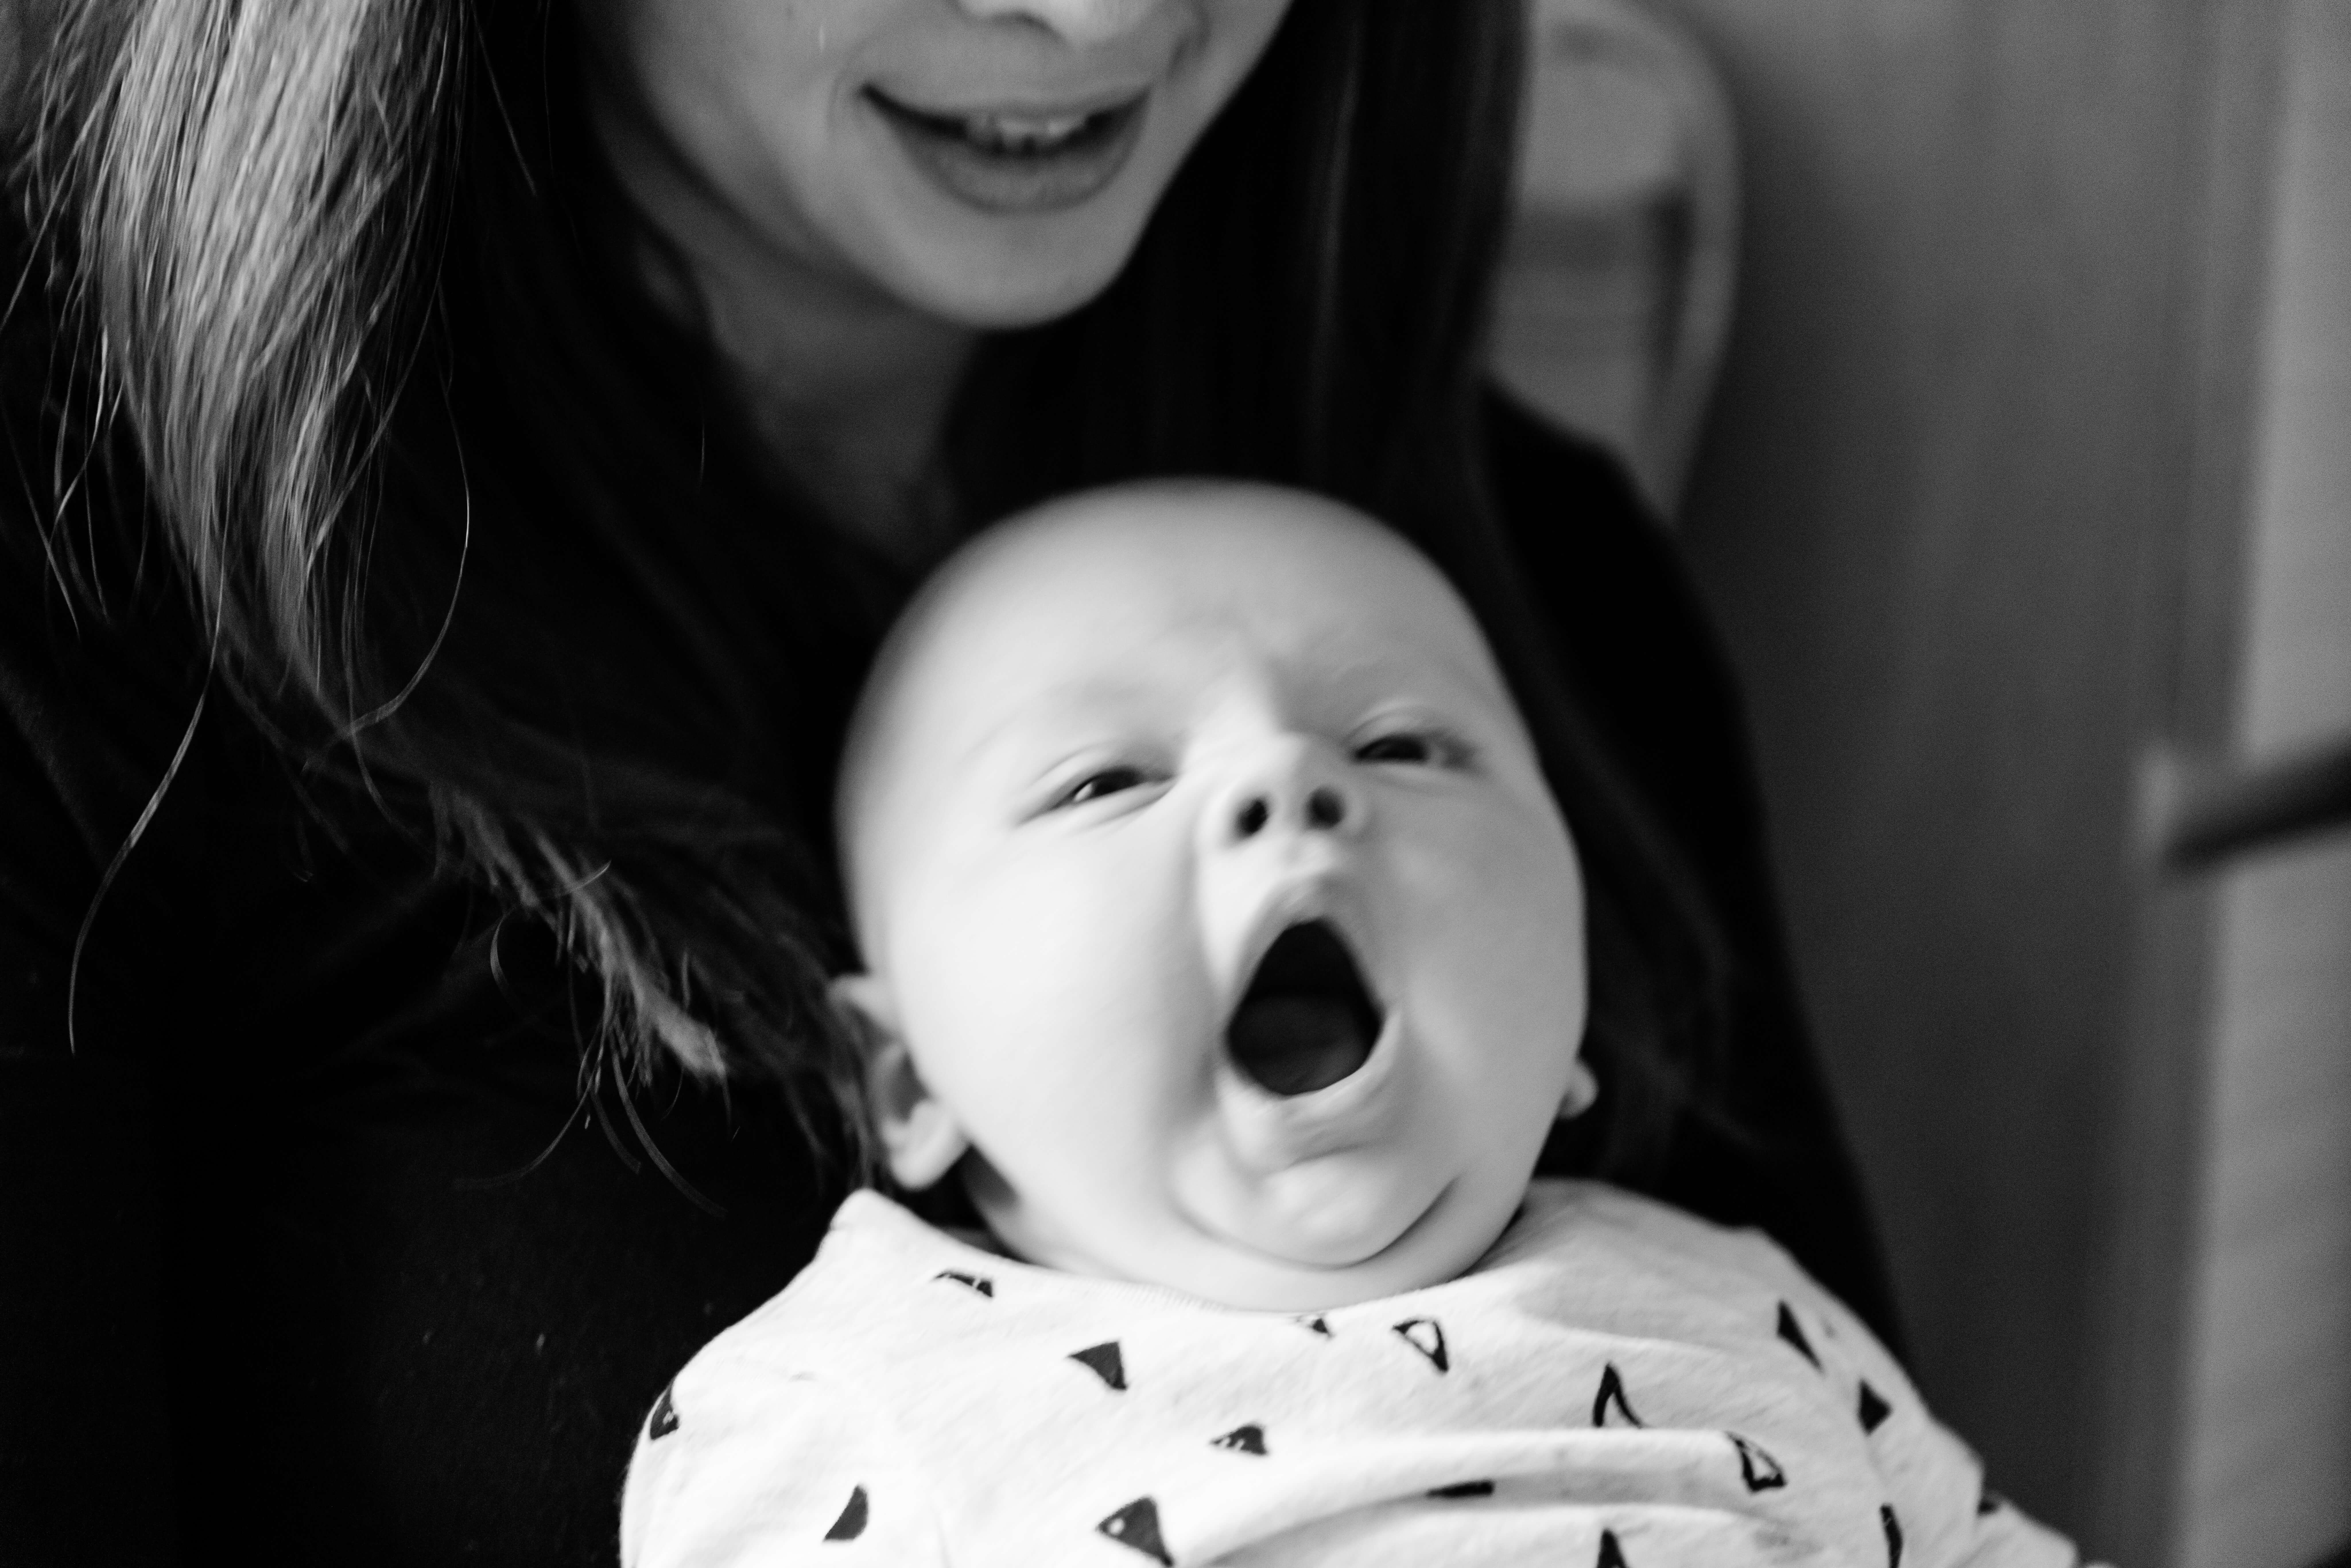 lockdown baby yawn black and white closeup by Chelmsford photographer Kika Mitchell